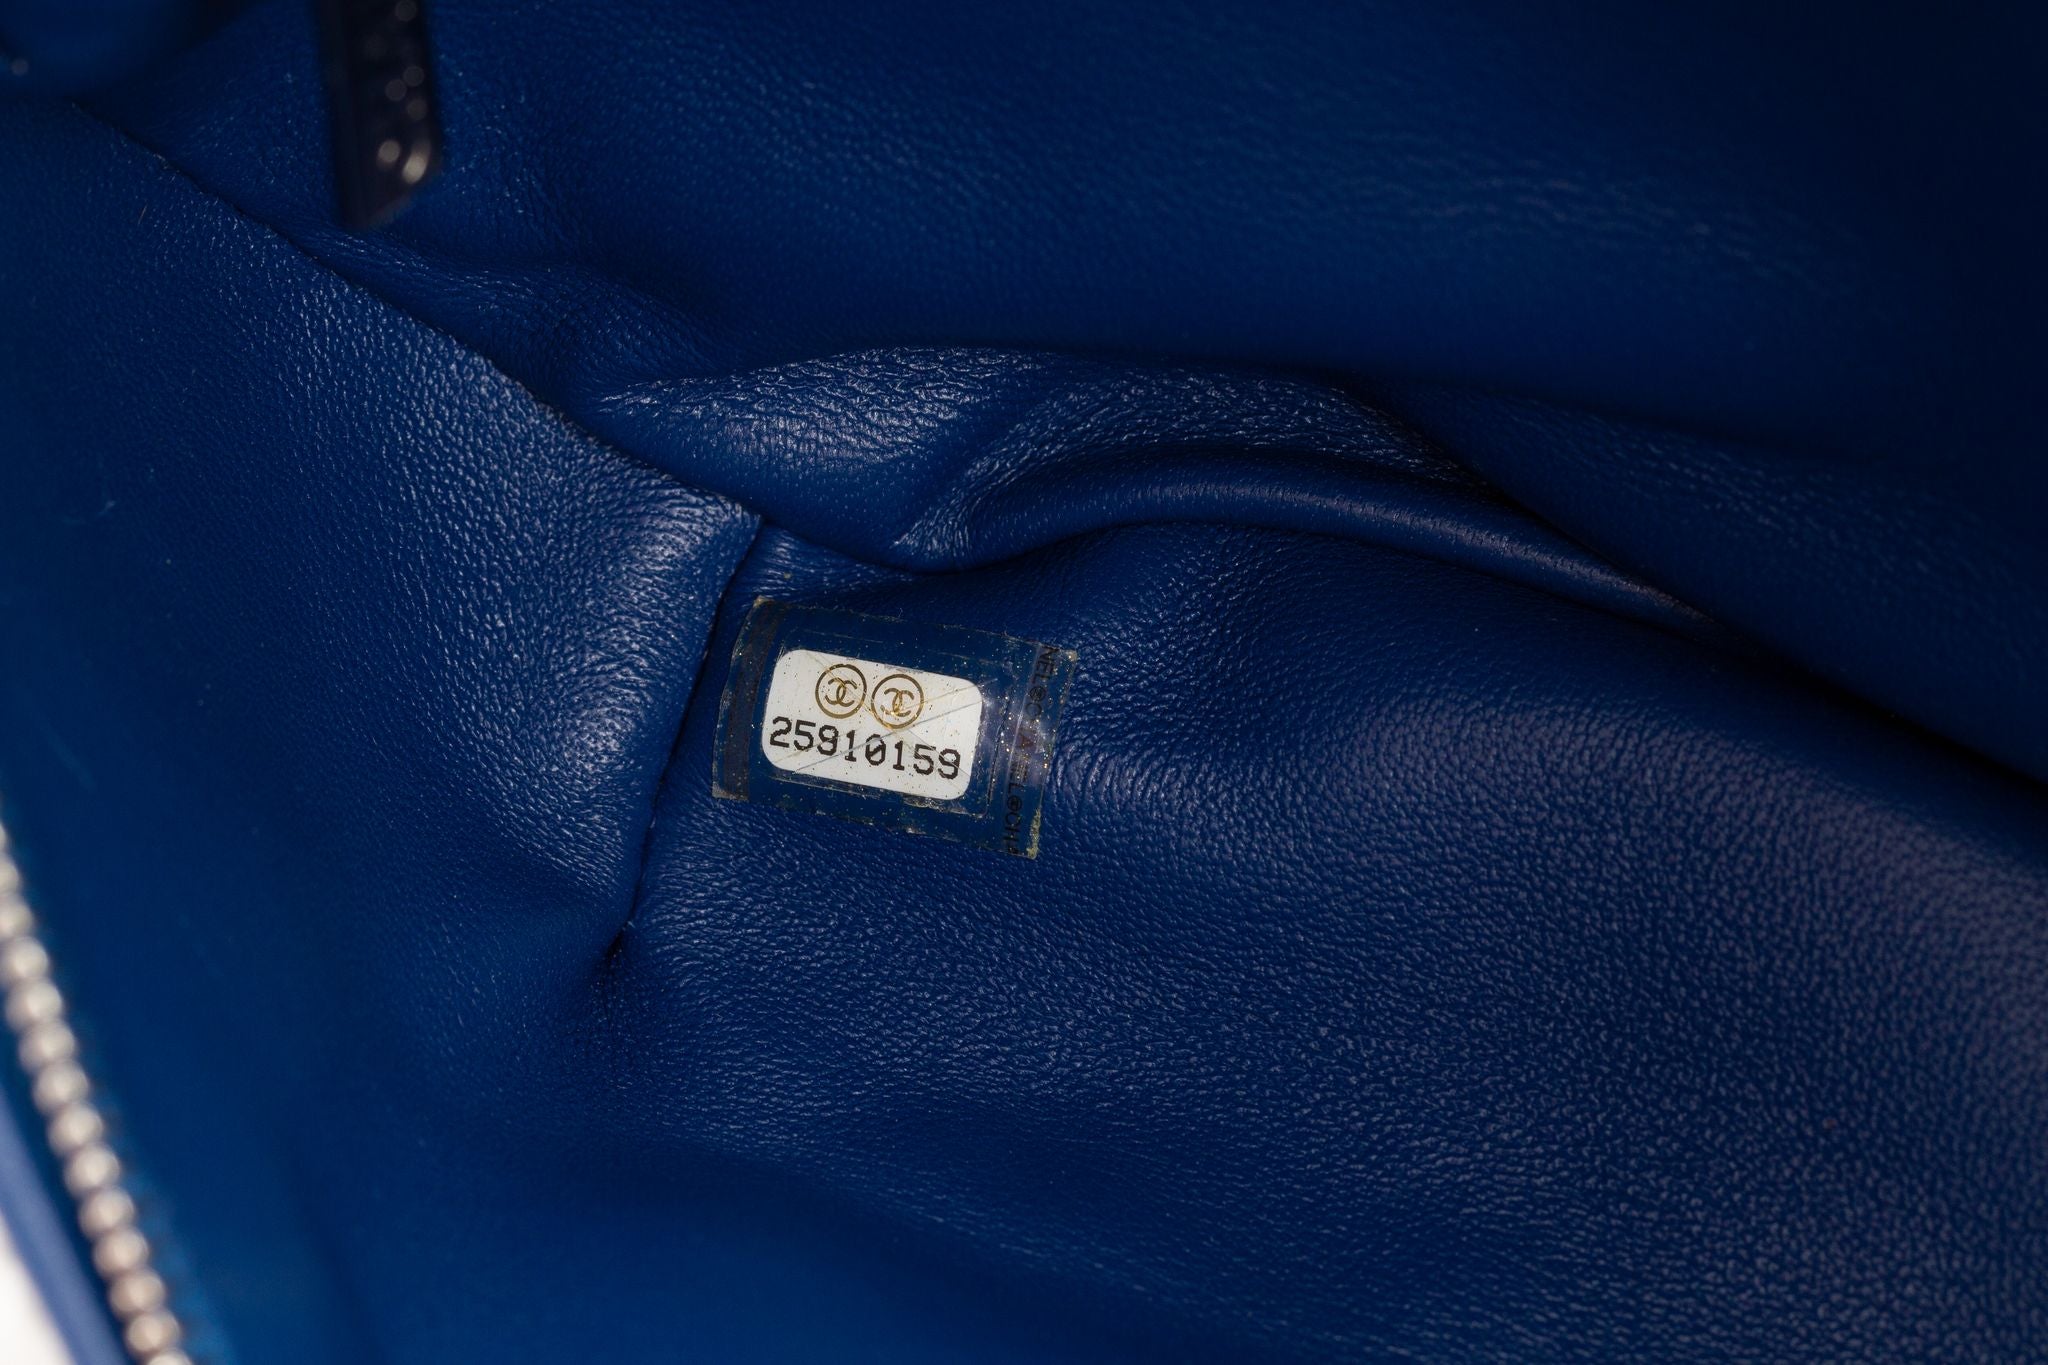 Chanel Blue Sequins Waterfall Belt Bag - Vintage Lux